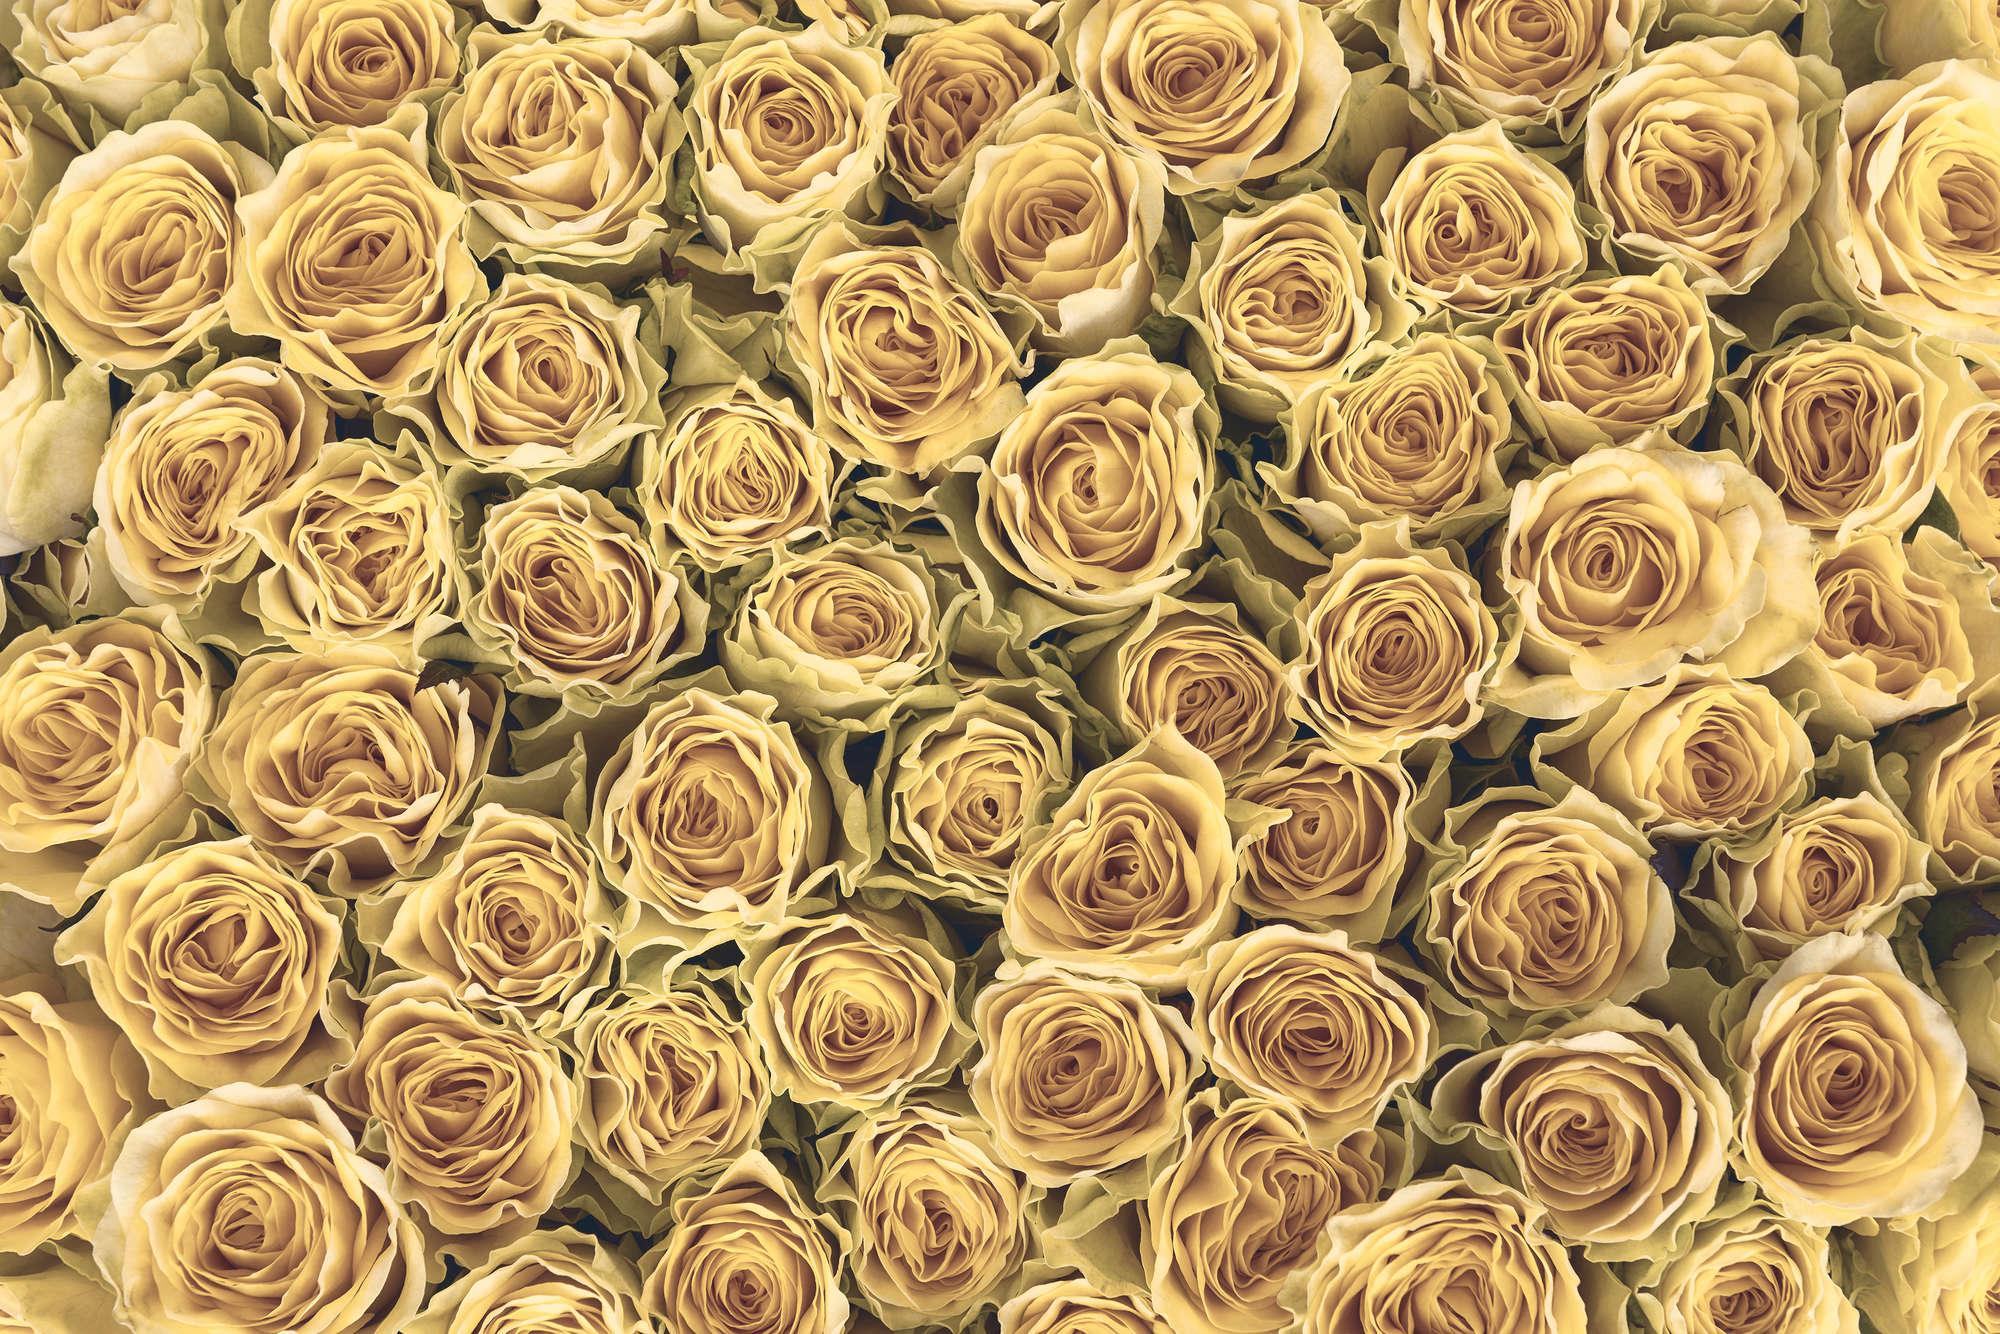             Plantenbehang gouden rozen op parelmoer glad vlies
        